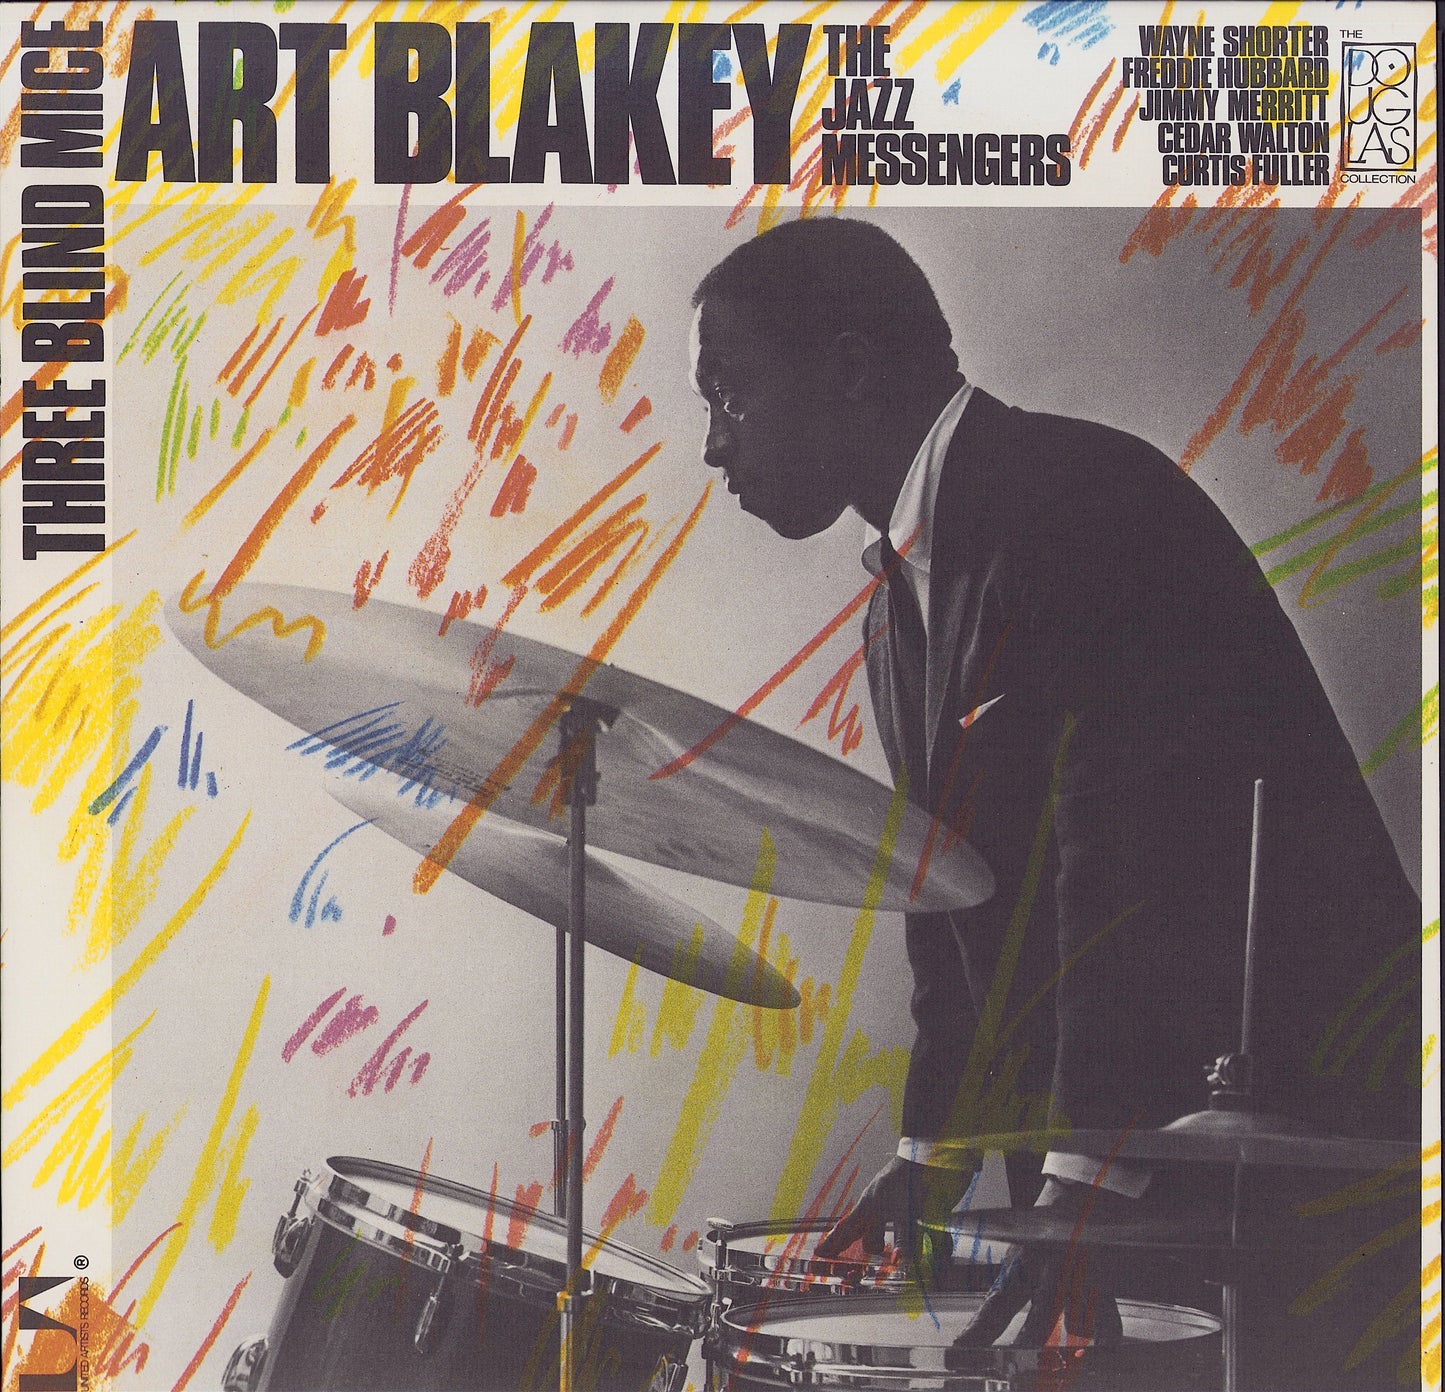 Art Blakey & The Jazz Messengers ‎- Three Blind Mice Vinyl LP US